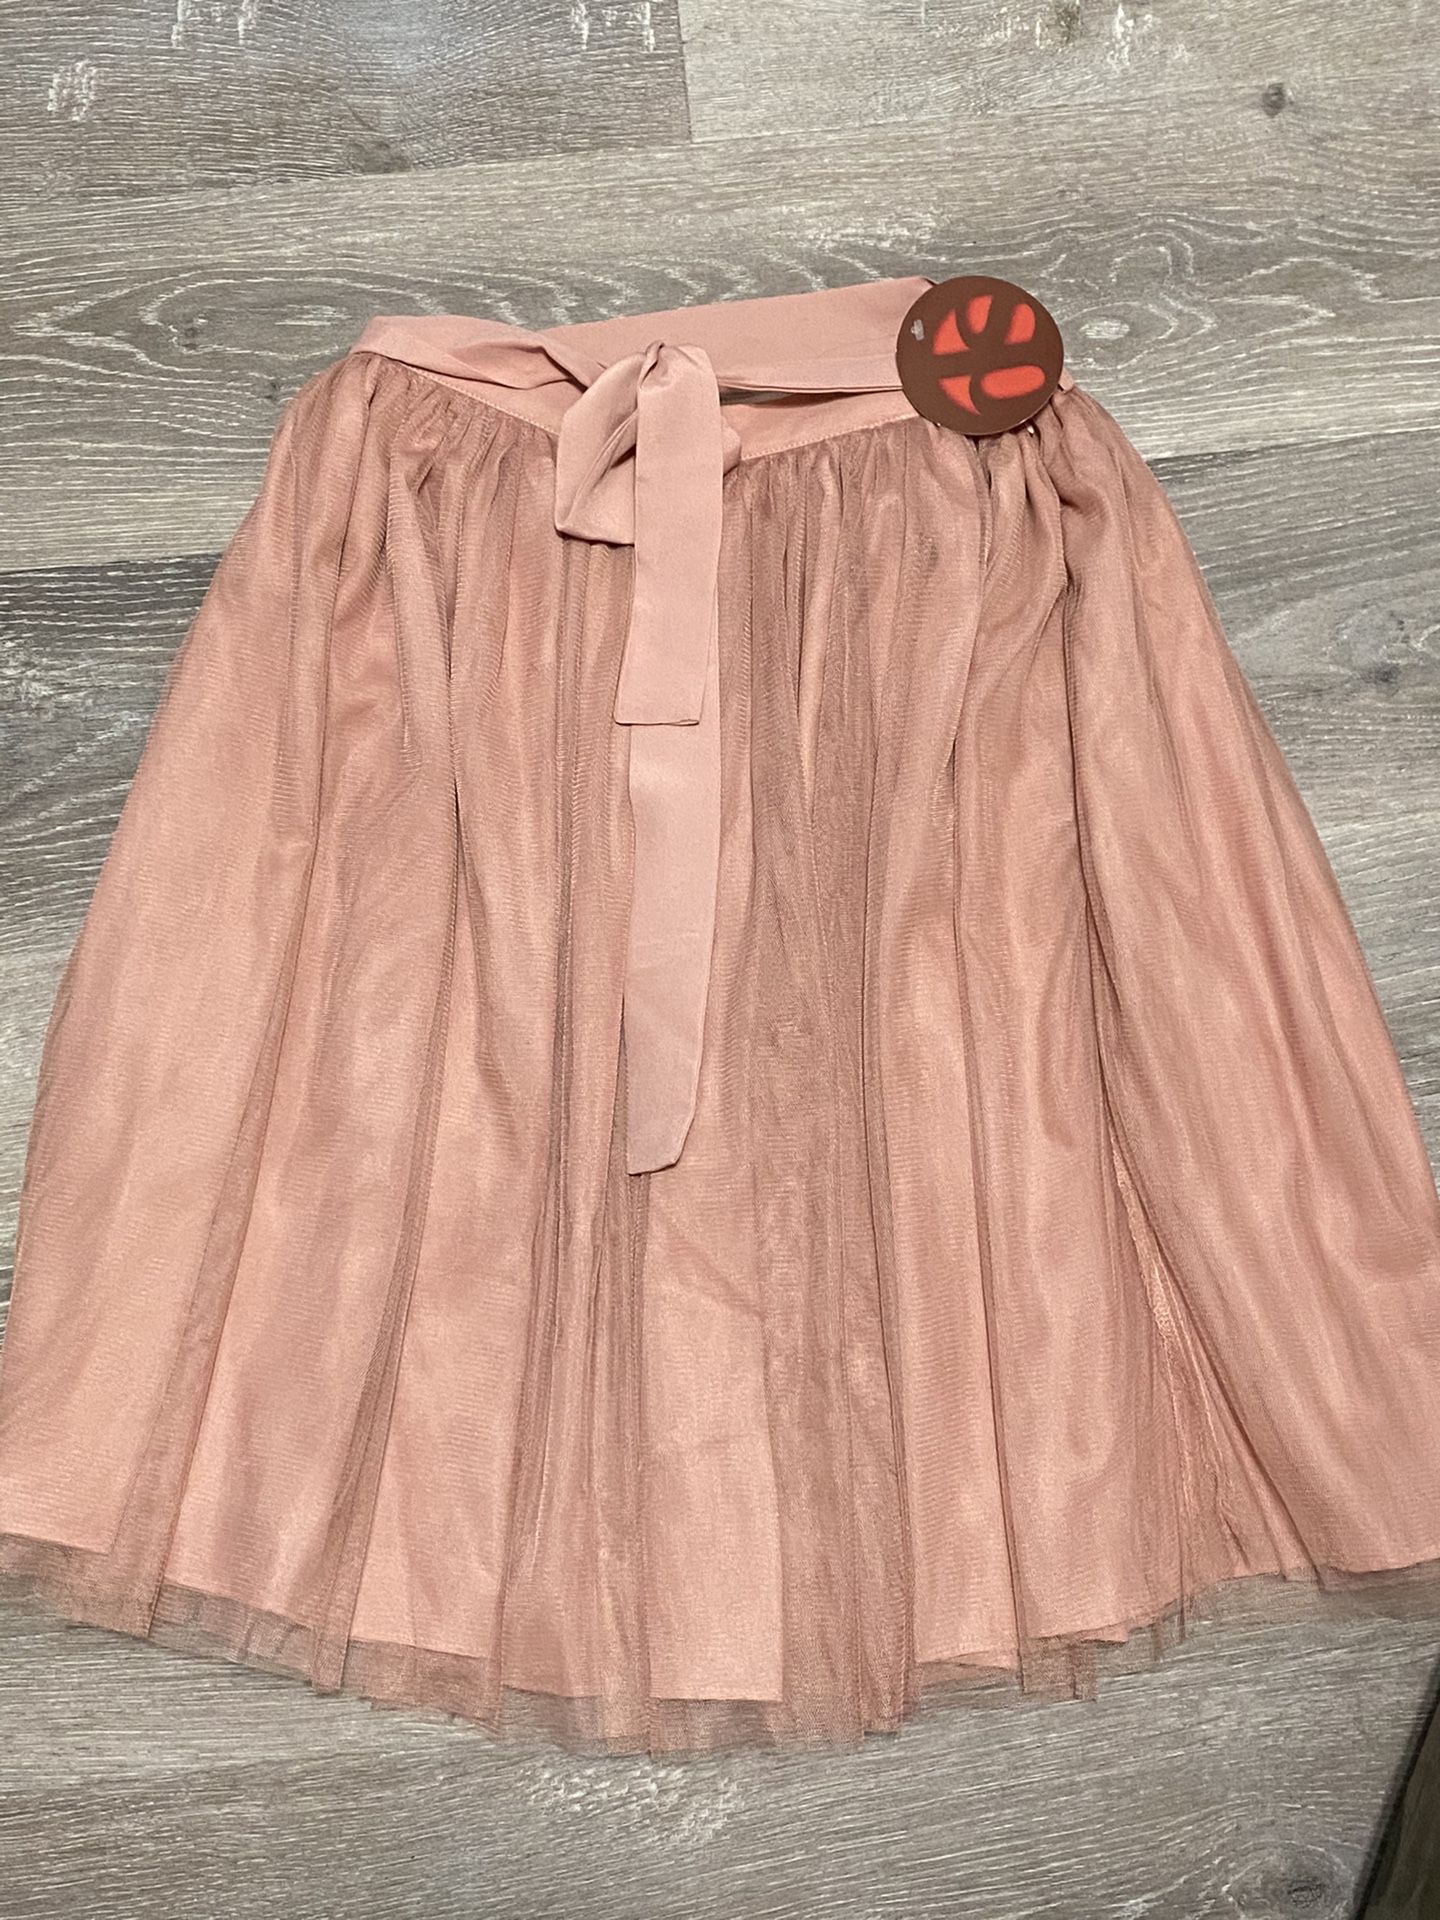 NWT Women’s Boutique Tulle Skirt - Medium